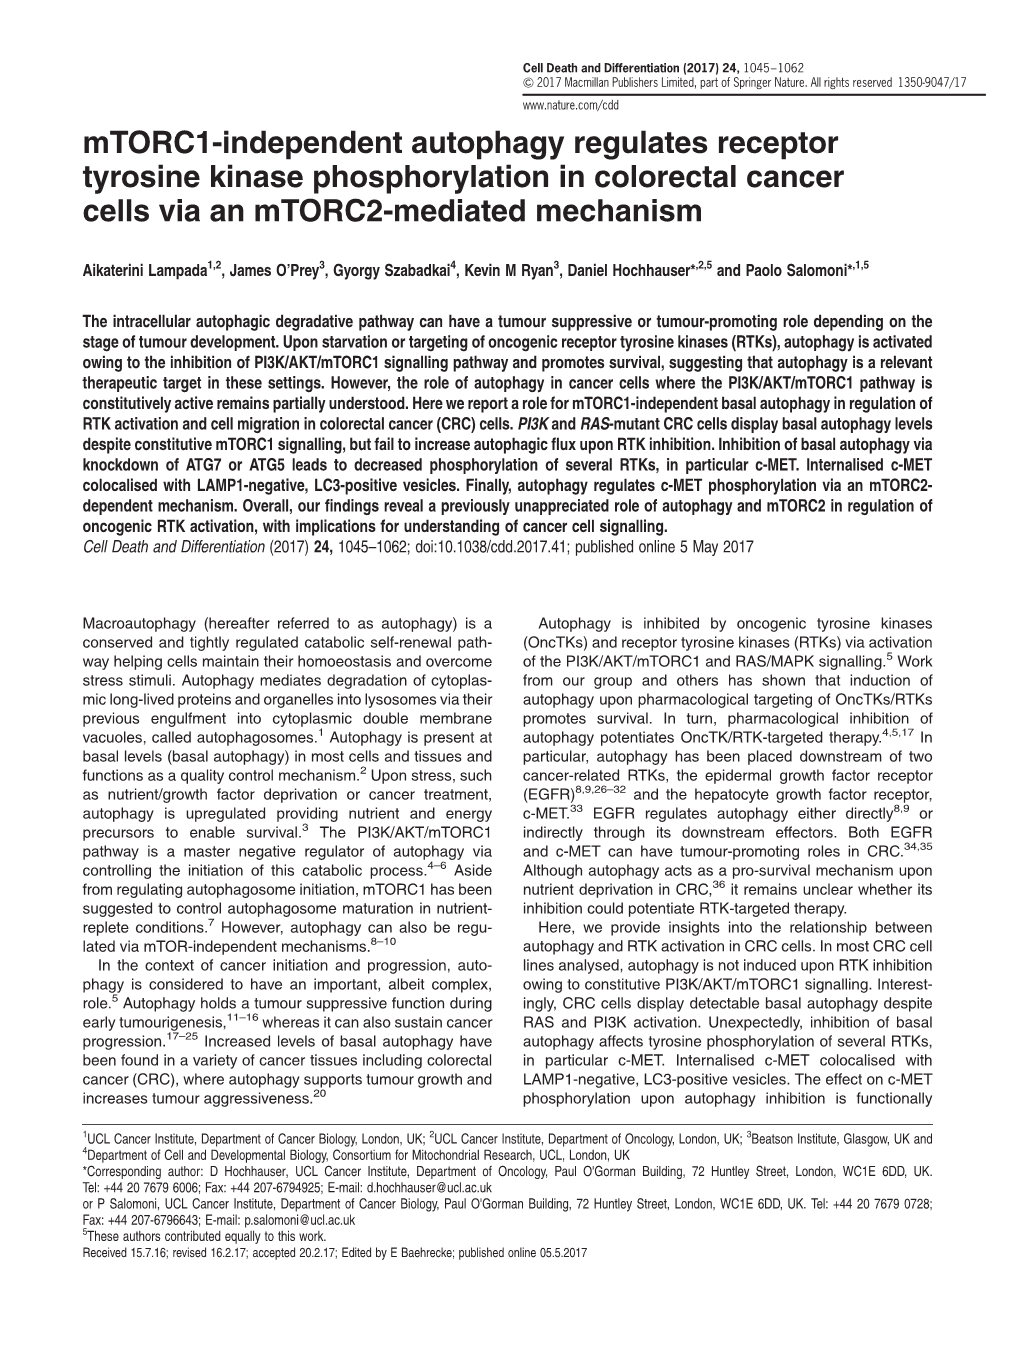 Mtorc1-Independent Autophagy Regulates Receptor Tyrosine Kinase Phosphorylation in Colorectal Cancer Cells Via an Mtorc2-Mediated Mechanism